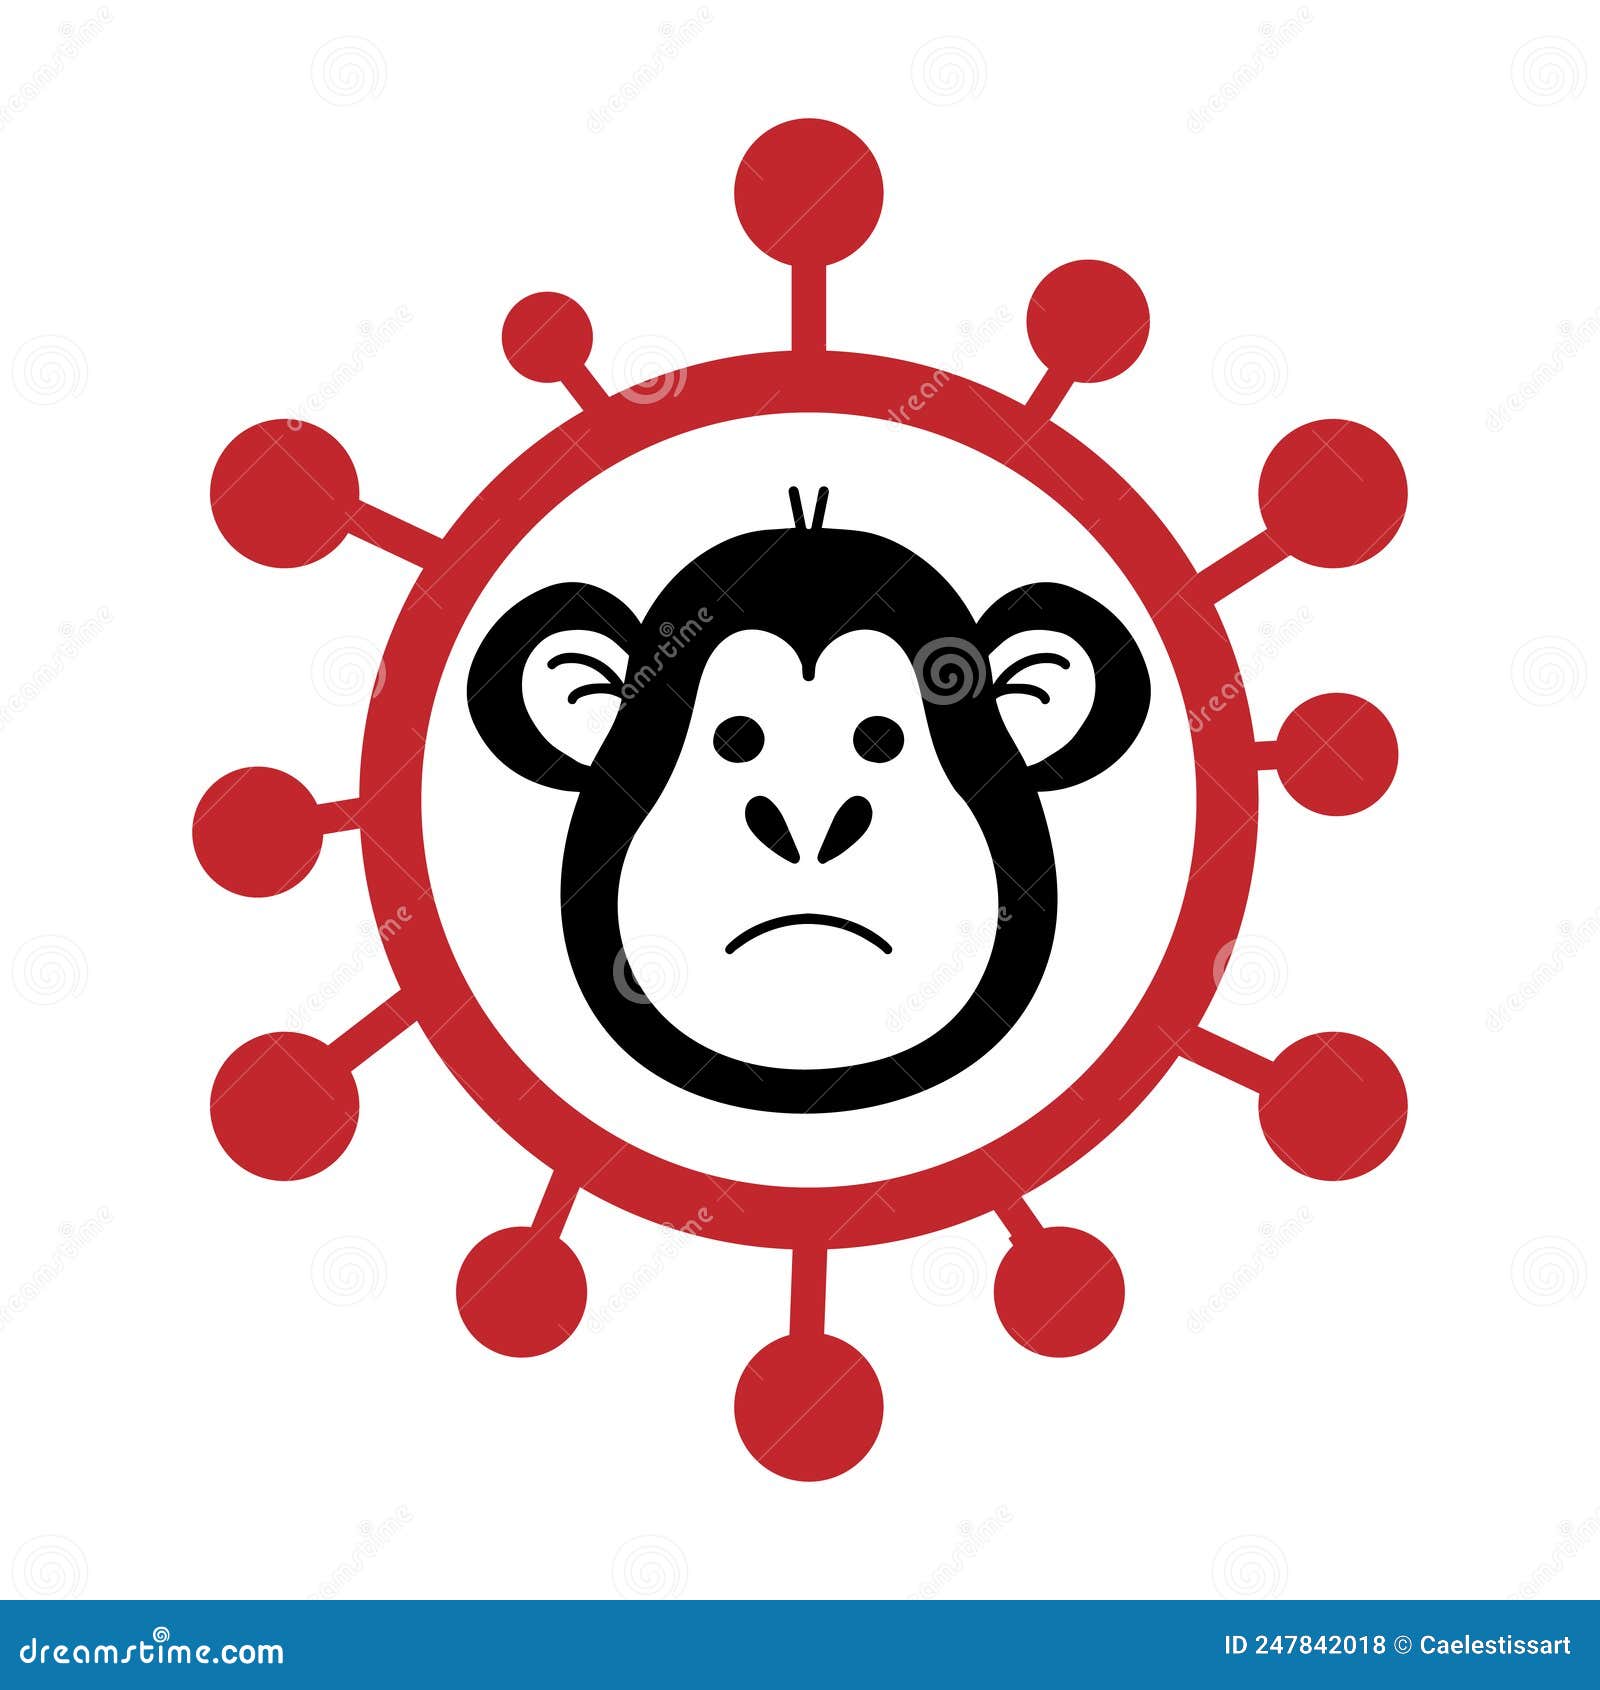   of monkey ape icon in red virus molecula-  of danger and alertness. monkeypox 2022 virus